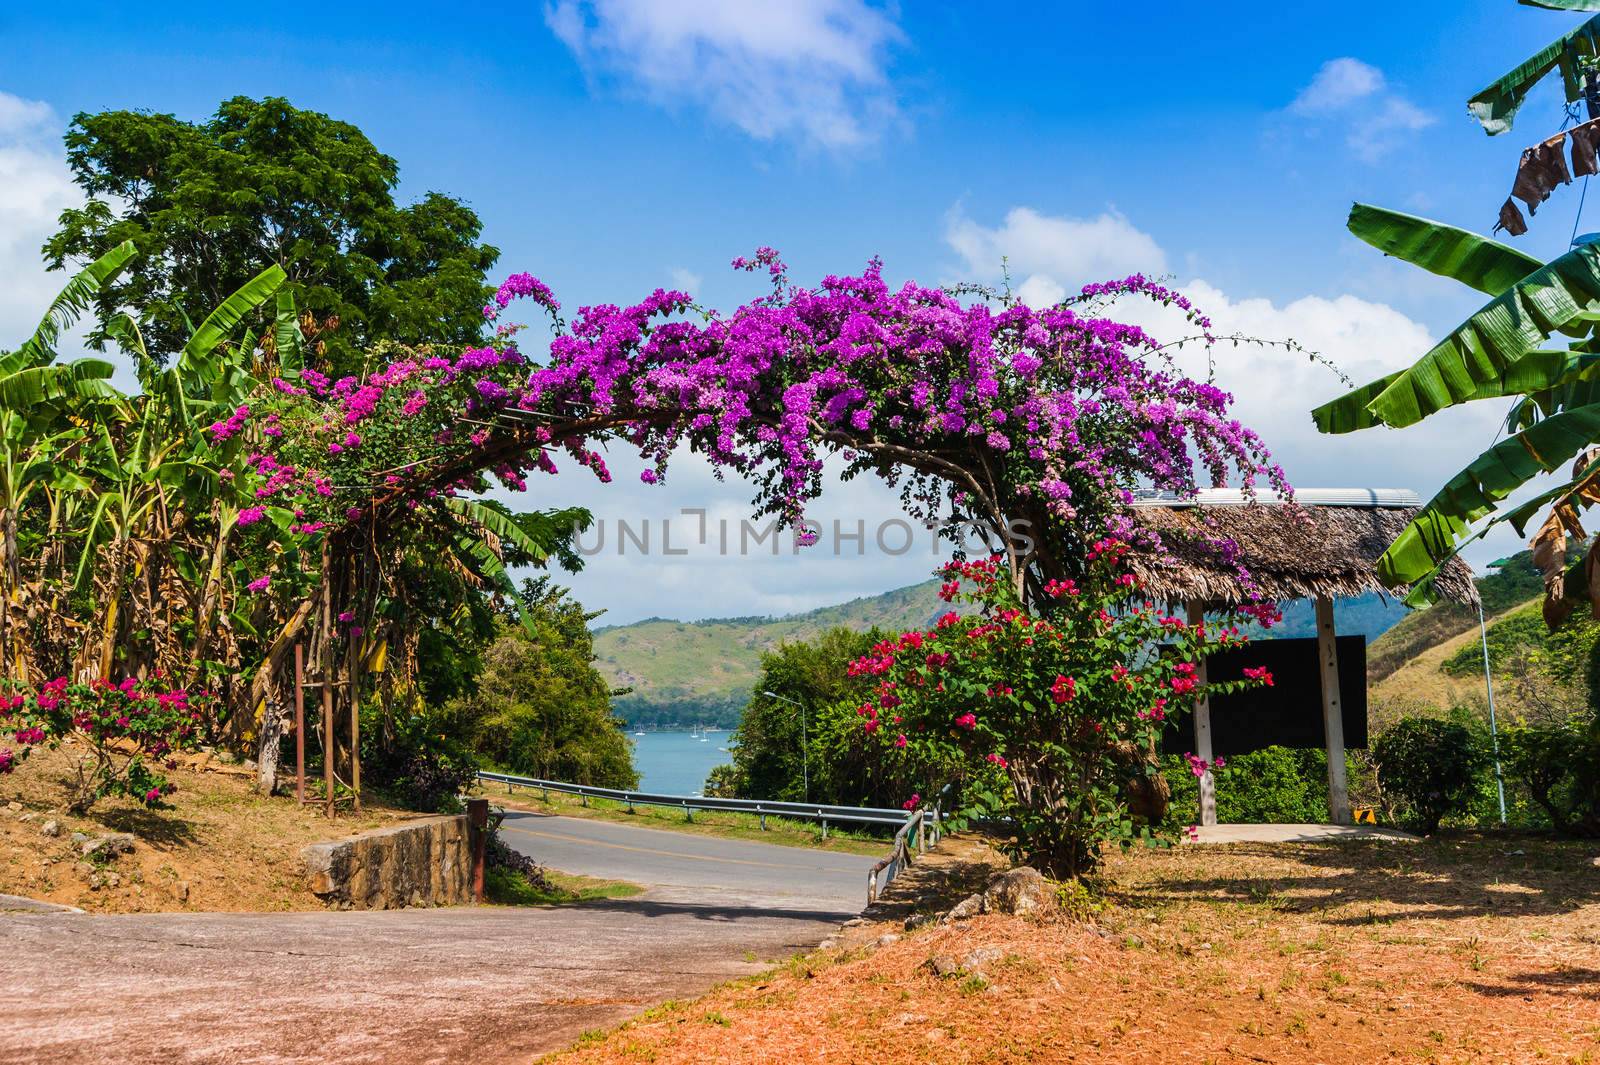 Arch of purple flowers in the garden in Thailand